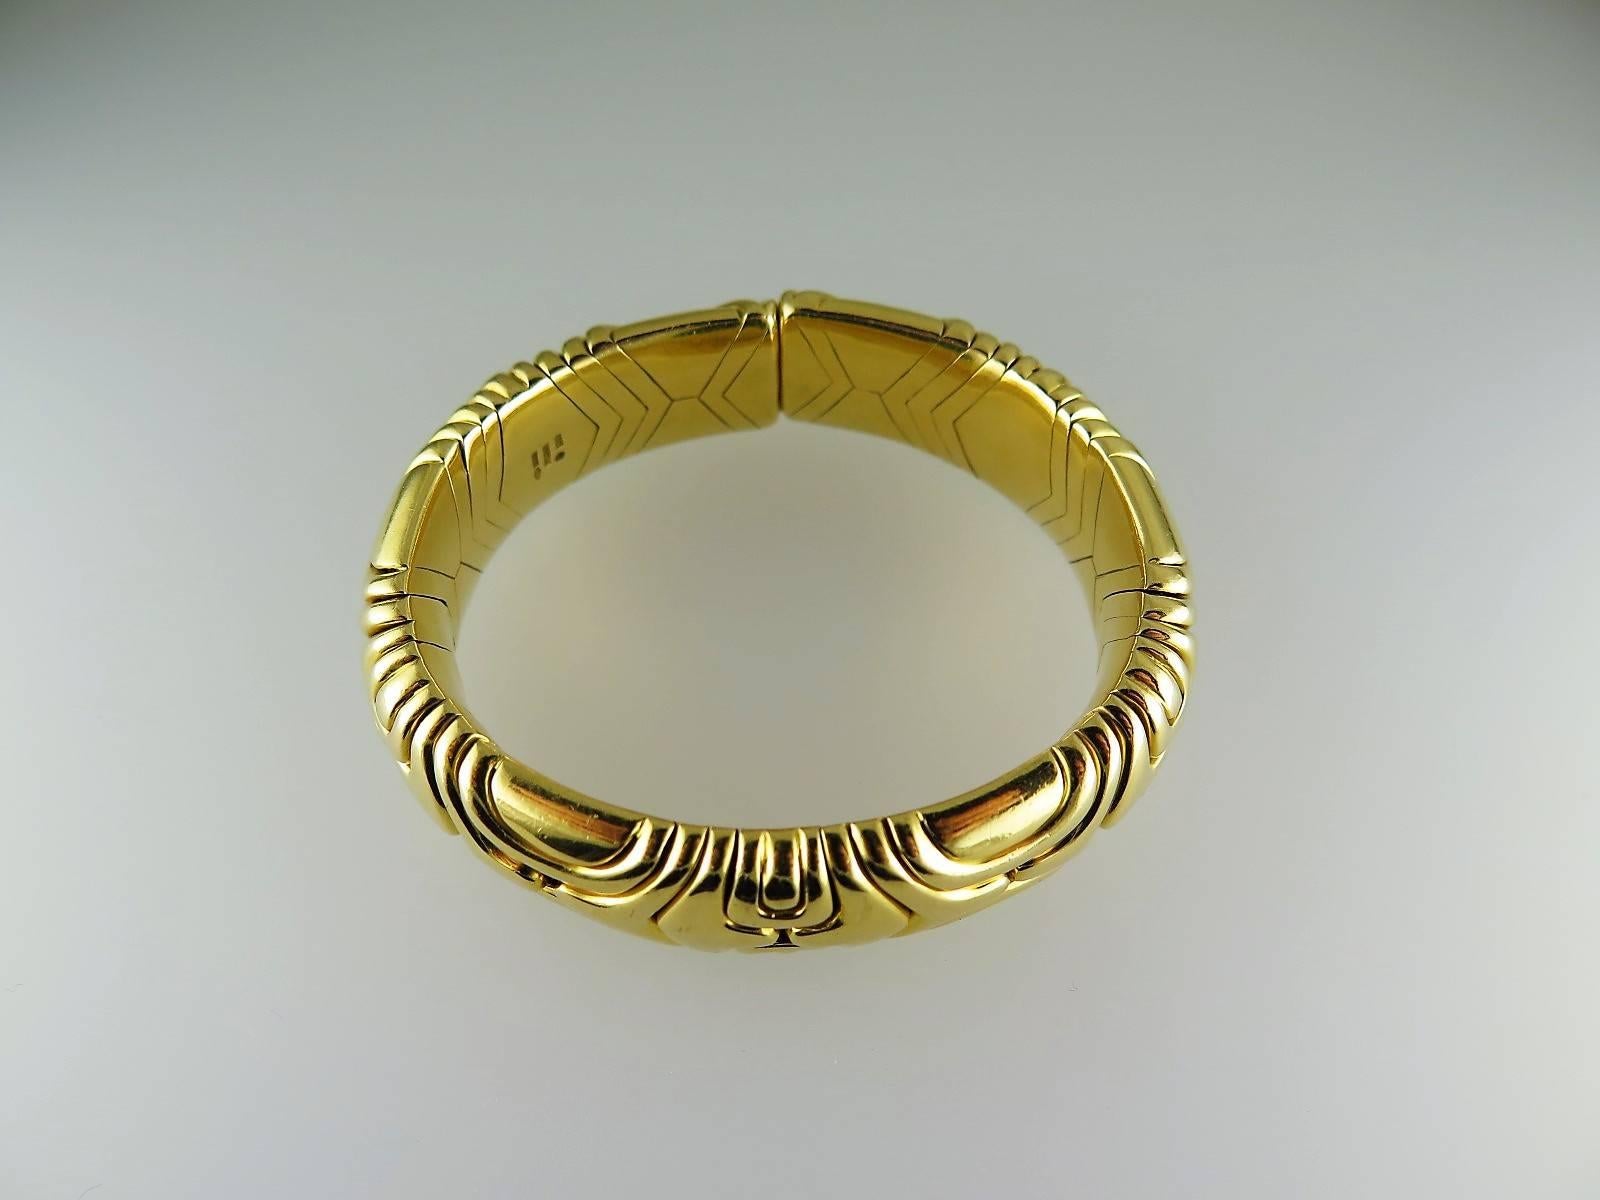 The polished 18ct gold sprung bangle of modular design, Signed Bulgari, Italian assay marks, dated 1989 